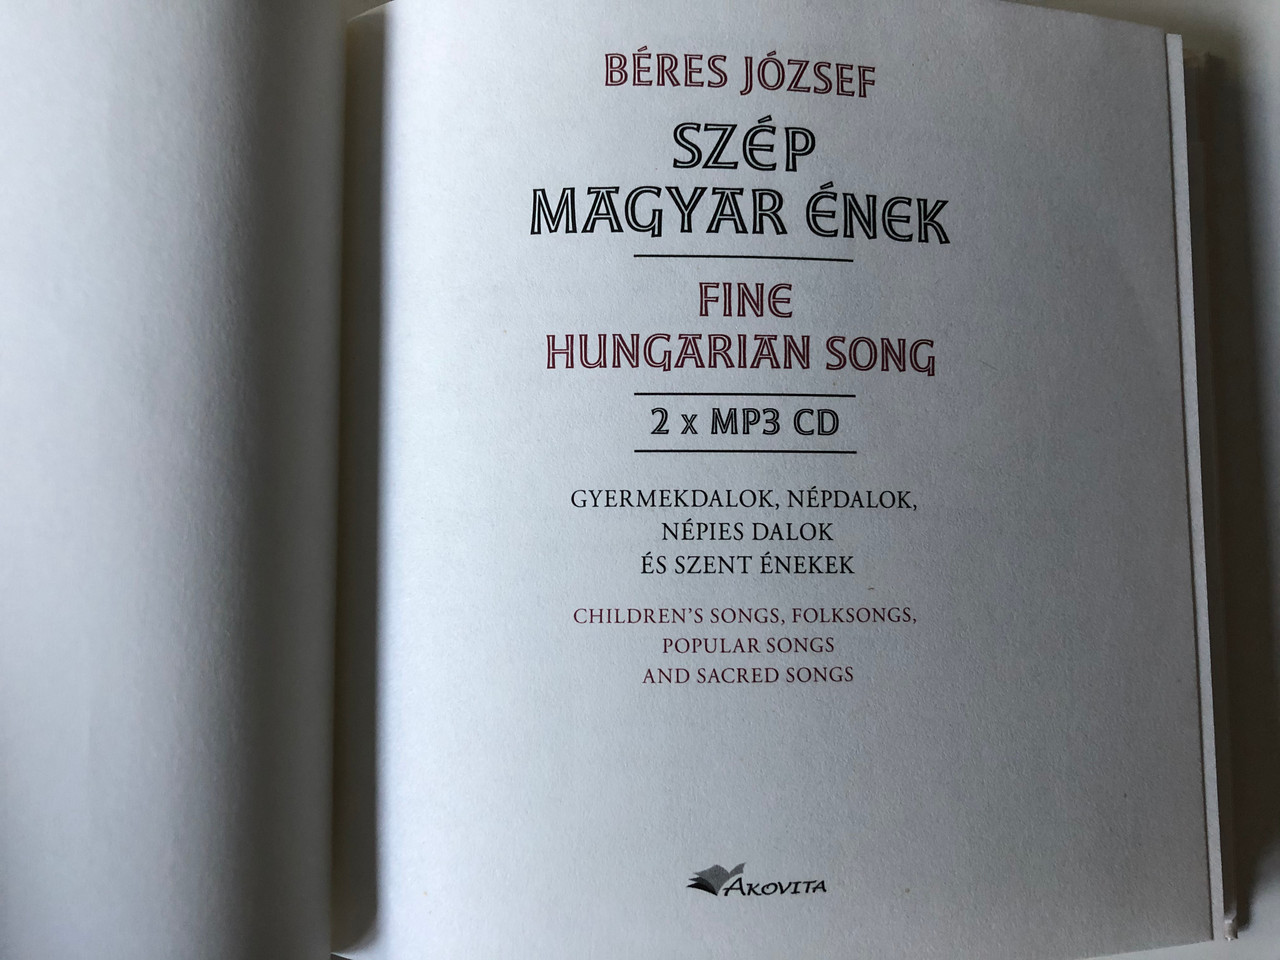 Szép magyar ének by Béres József / Fine Hungarian Song / Book & 2x MP3 CD /  Gyermekdalok, népdalok, népies dalok - Children's Songs, Folksongs, popular  songs with texts in English and